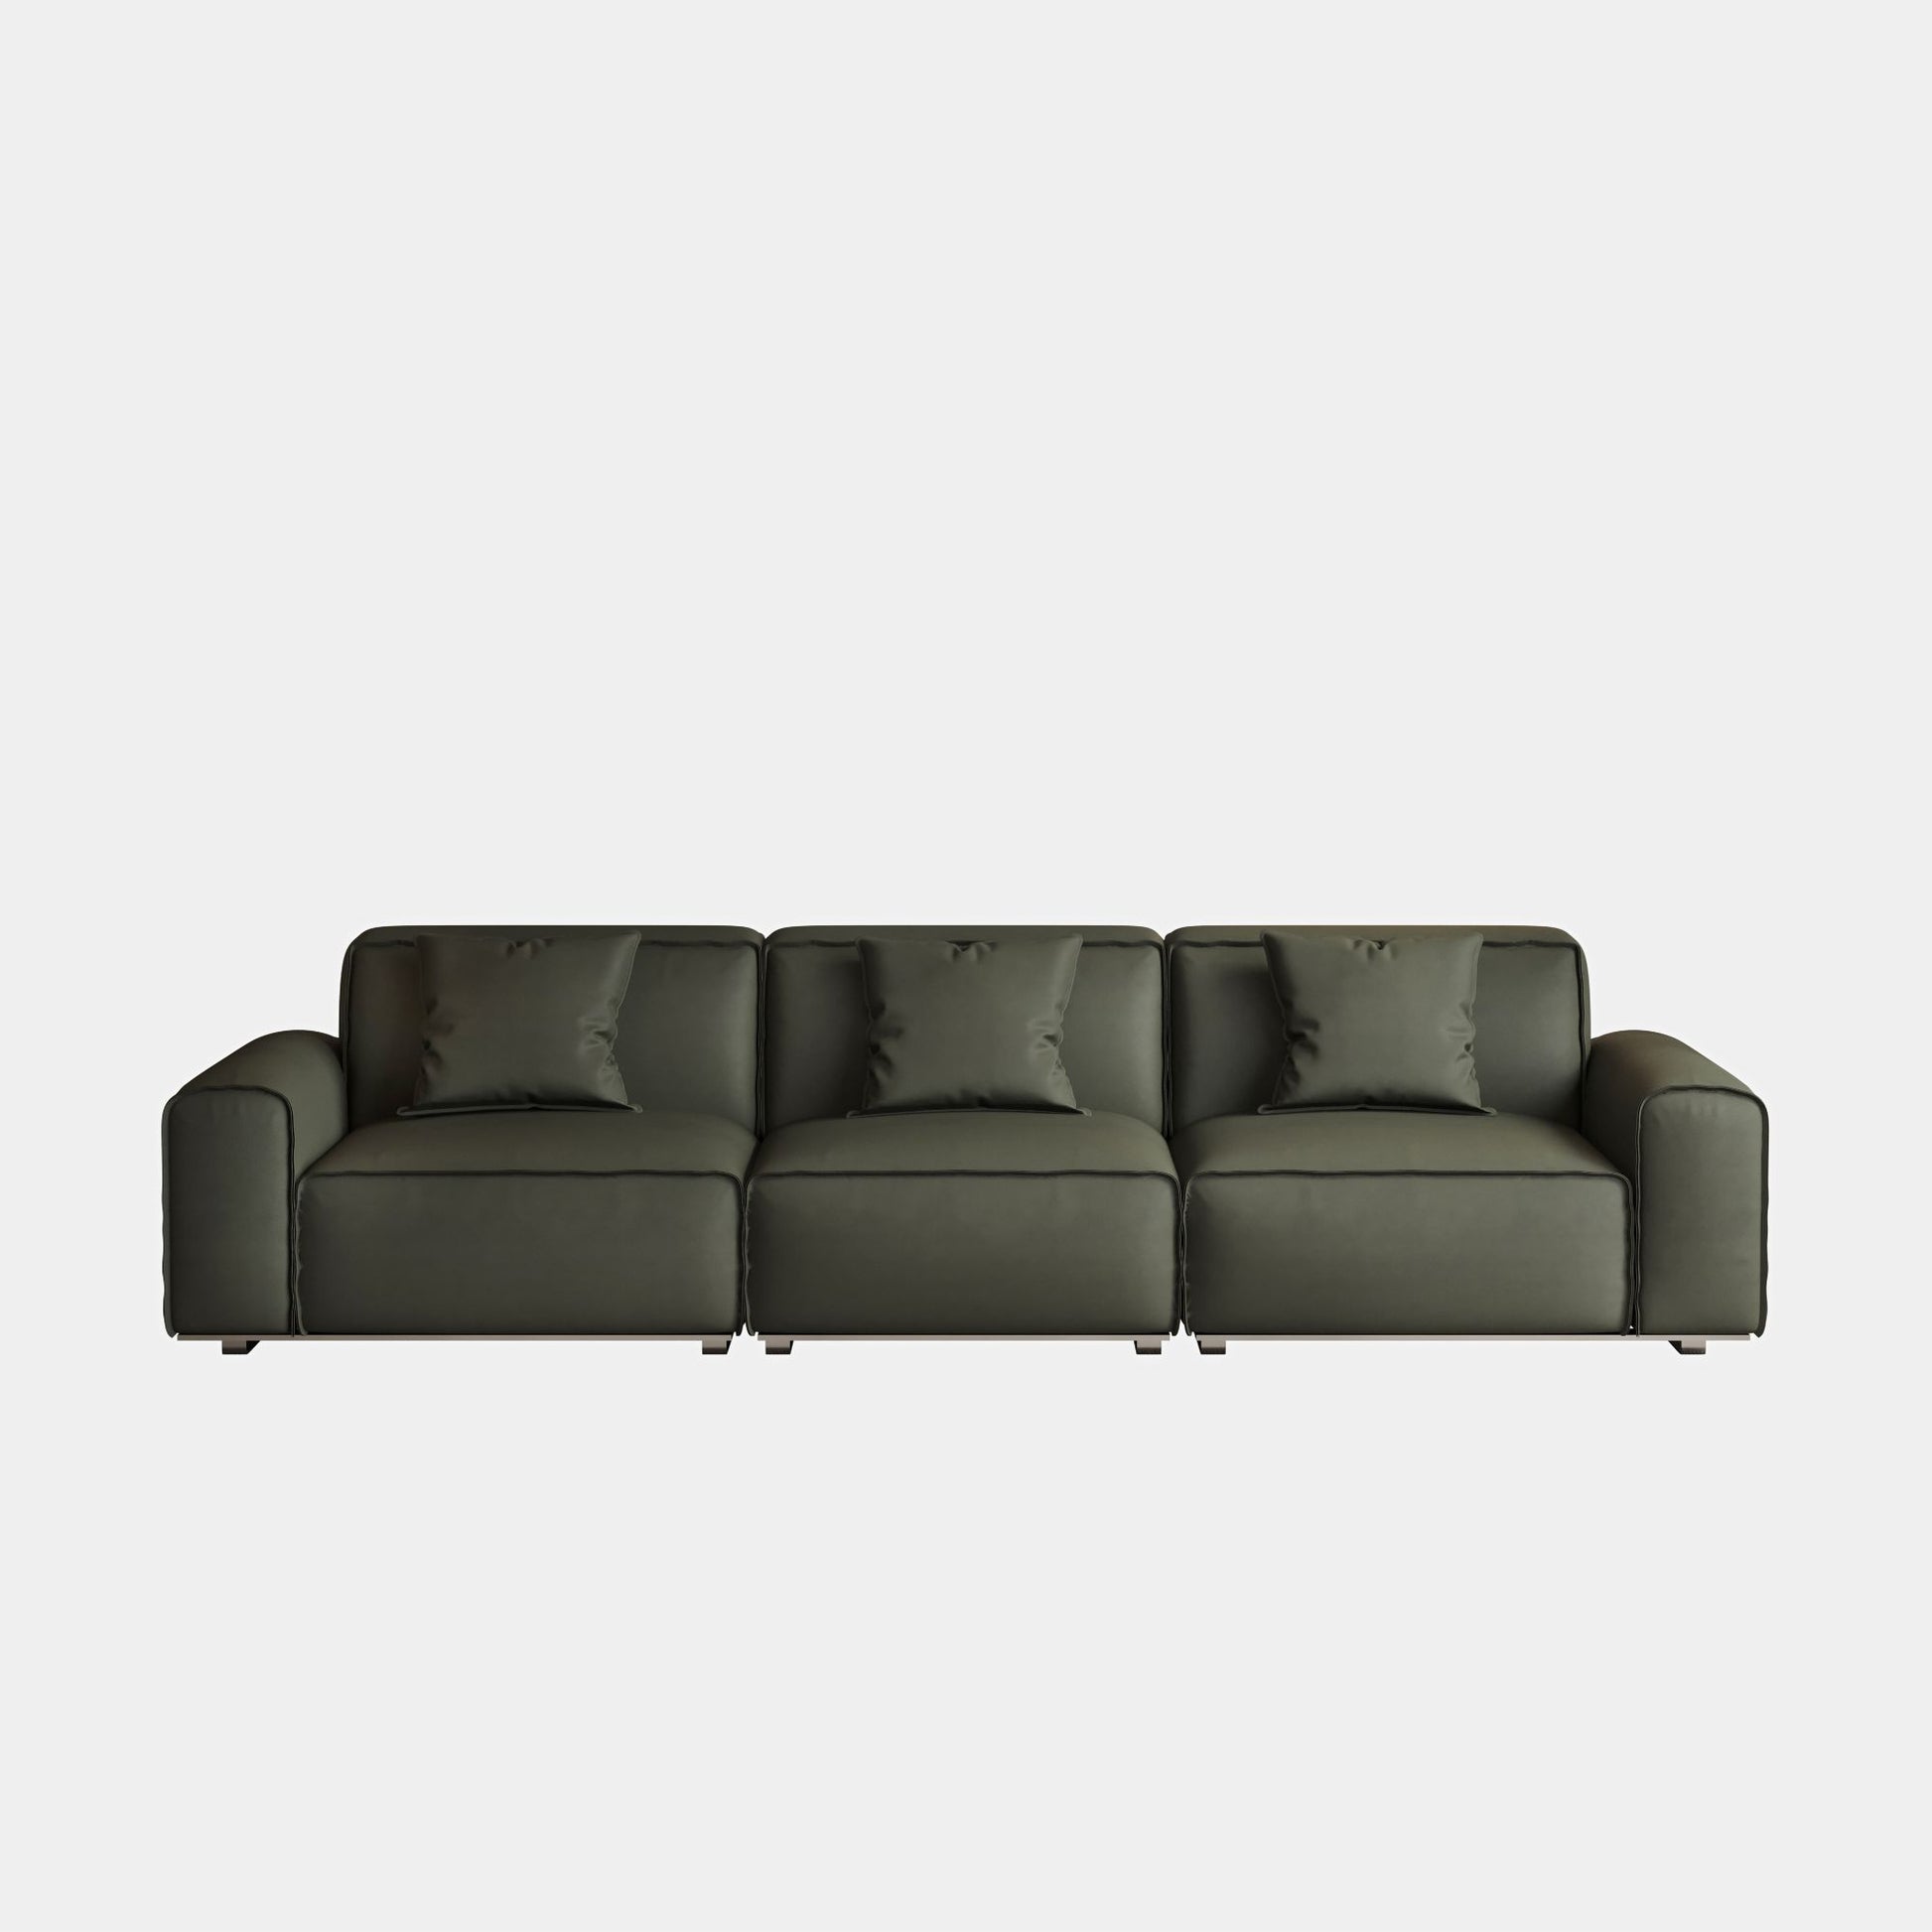 Colby dark green top grain full leather 3 seat sofa